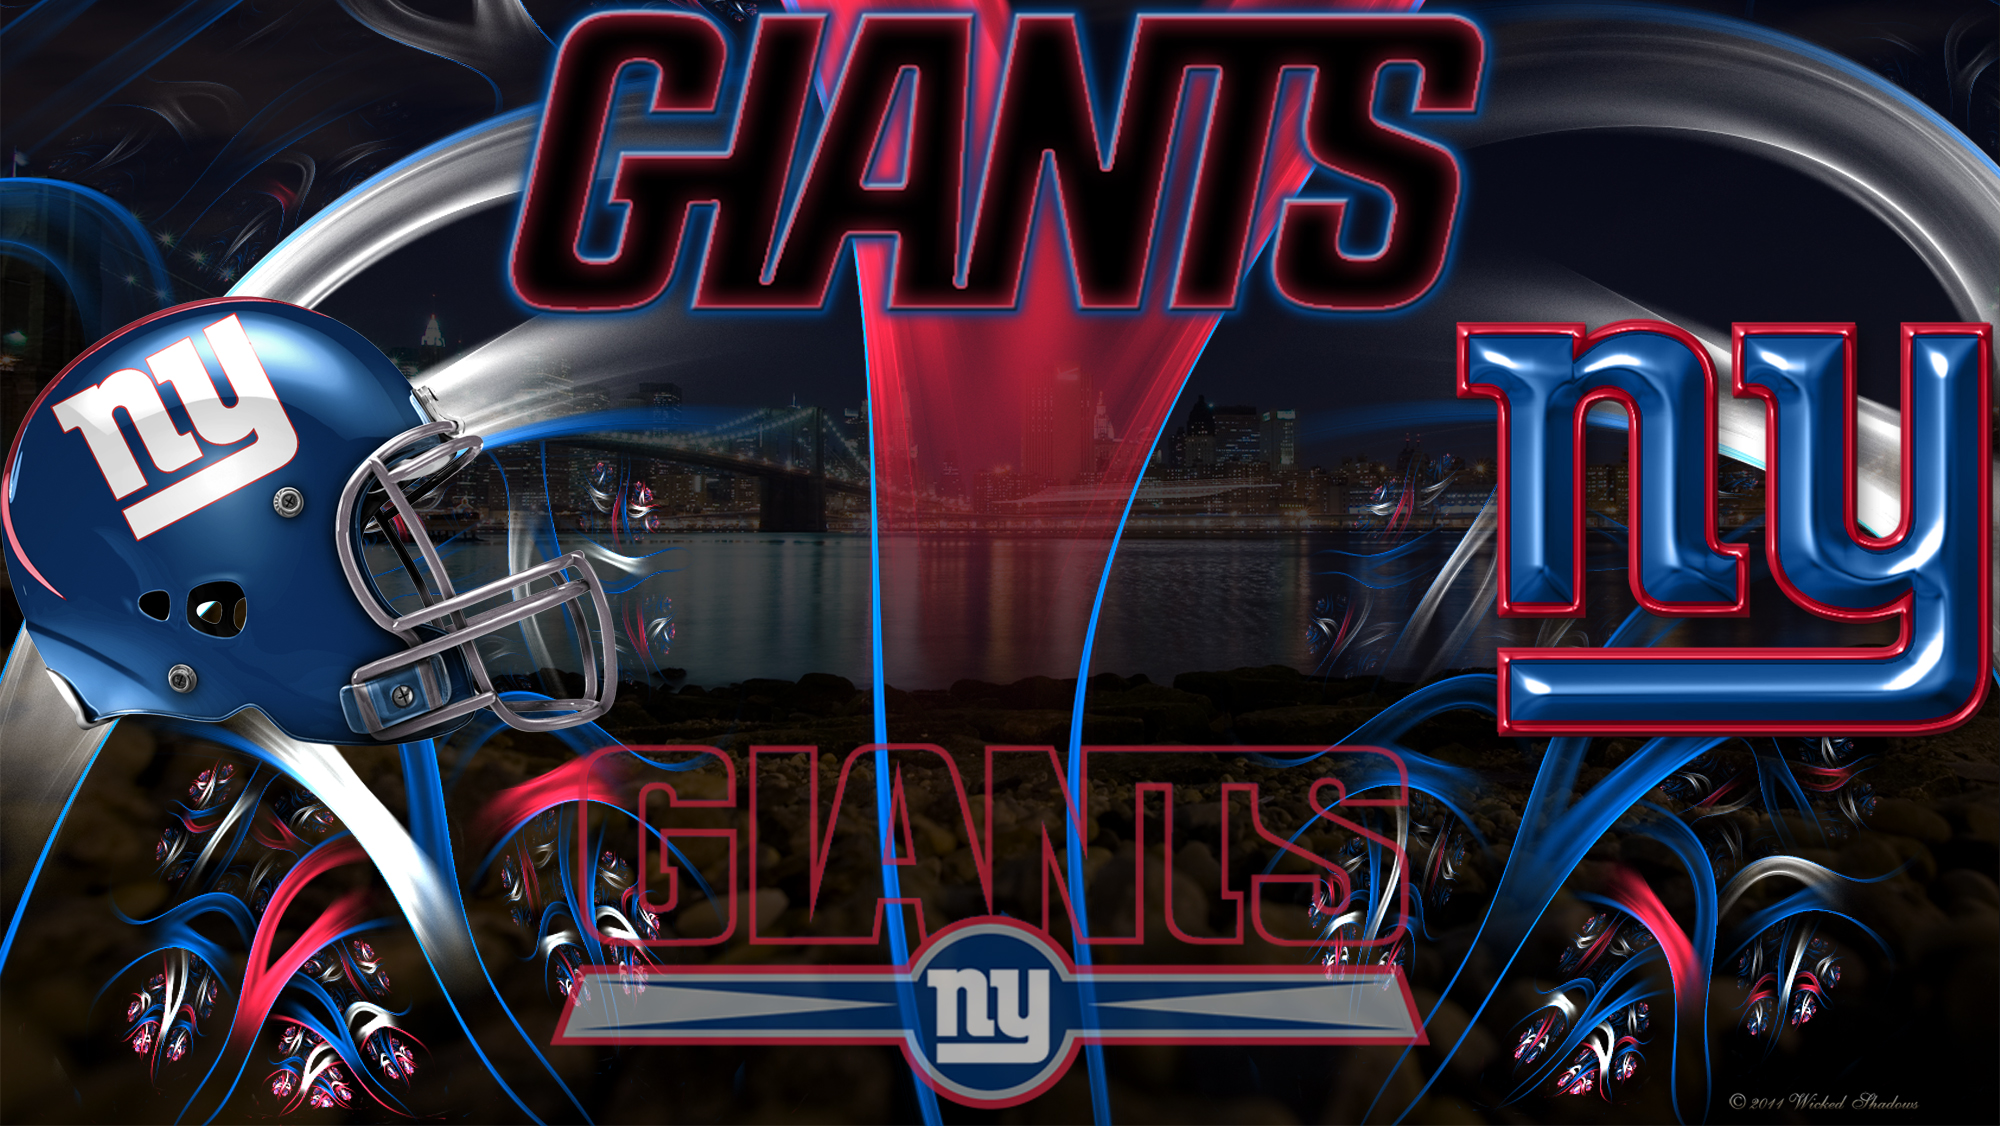 New York Giants Image Wallpaper